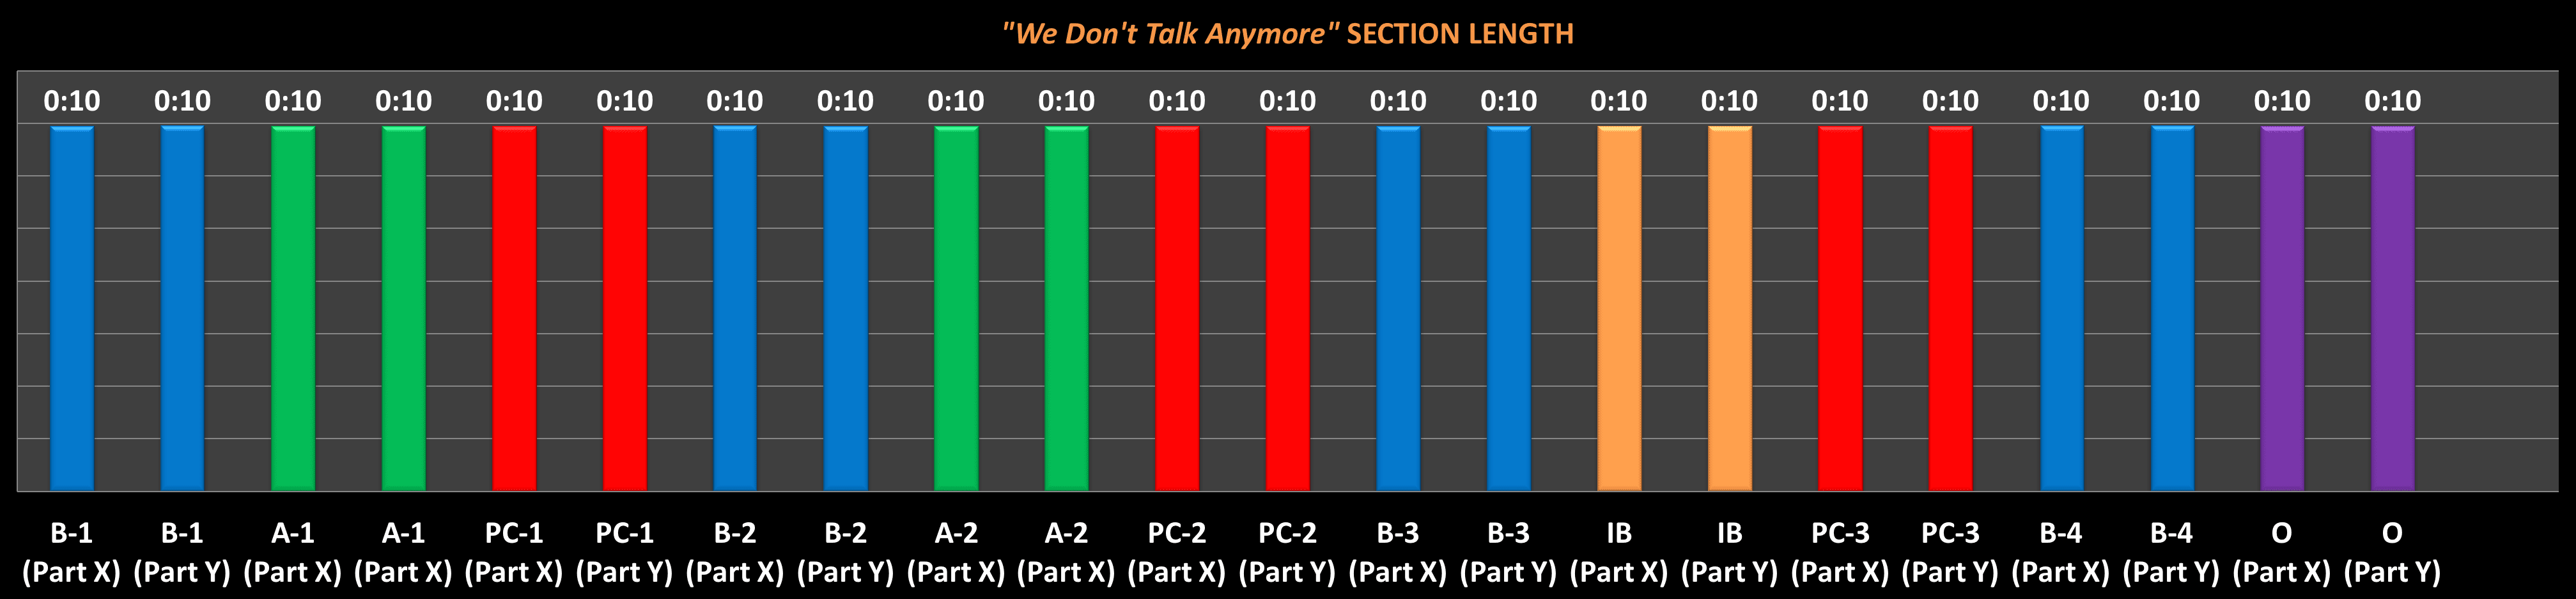 Section Length-wdta